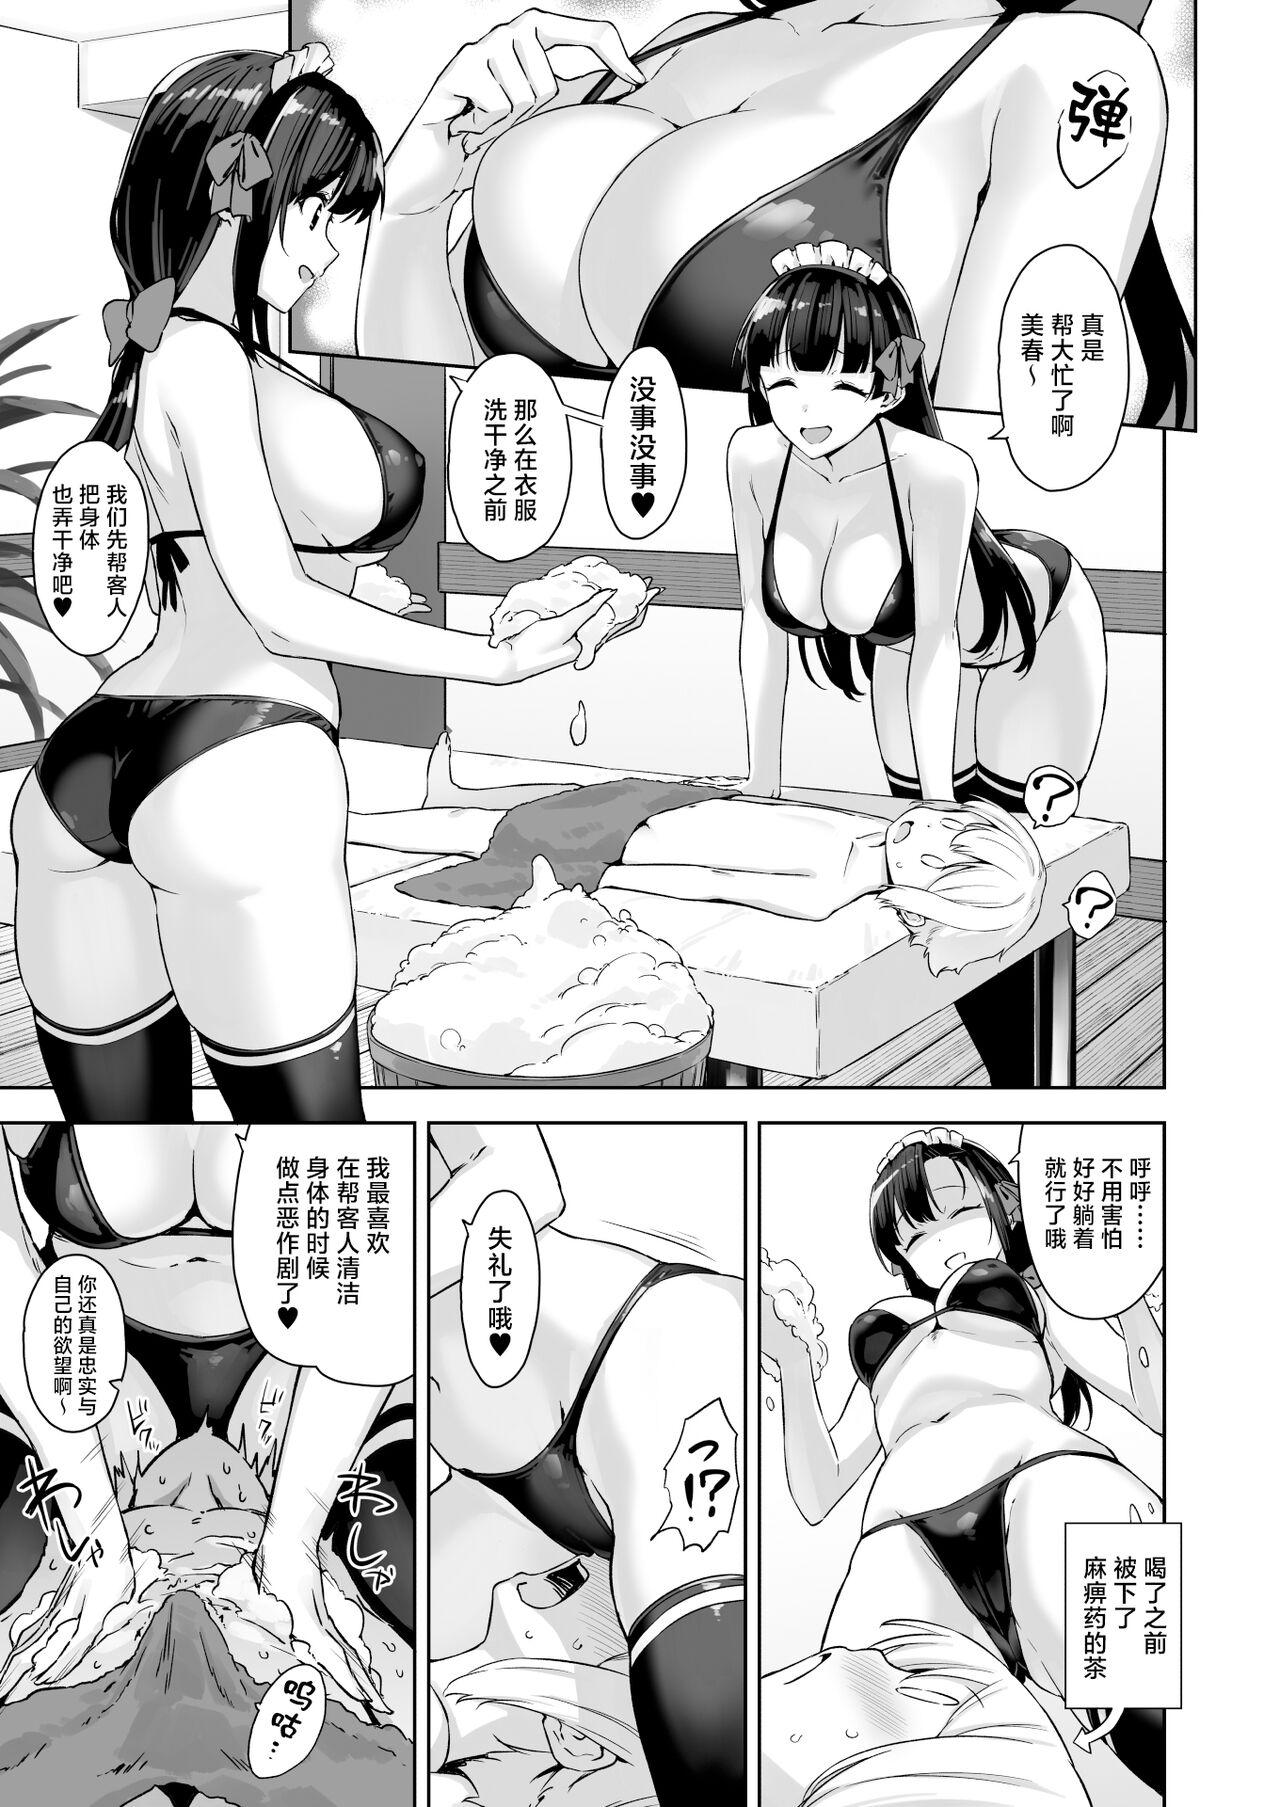 Omake Manga 8